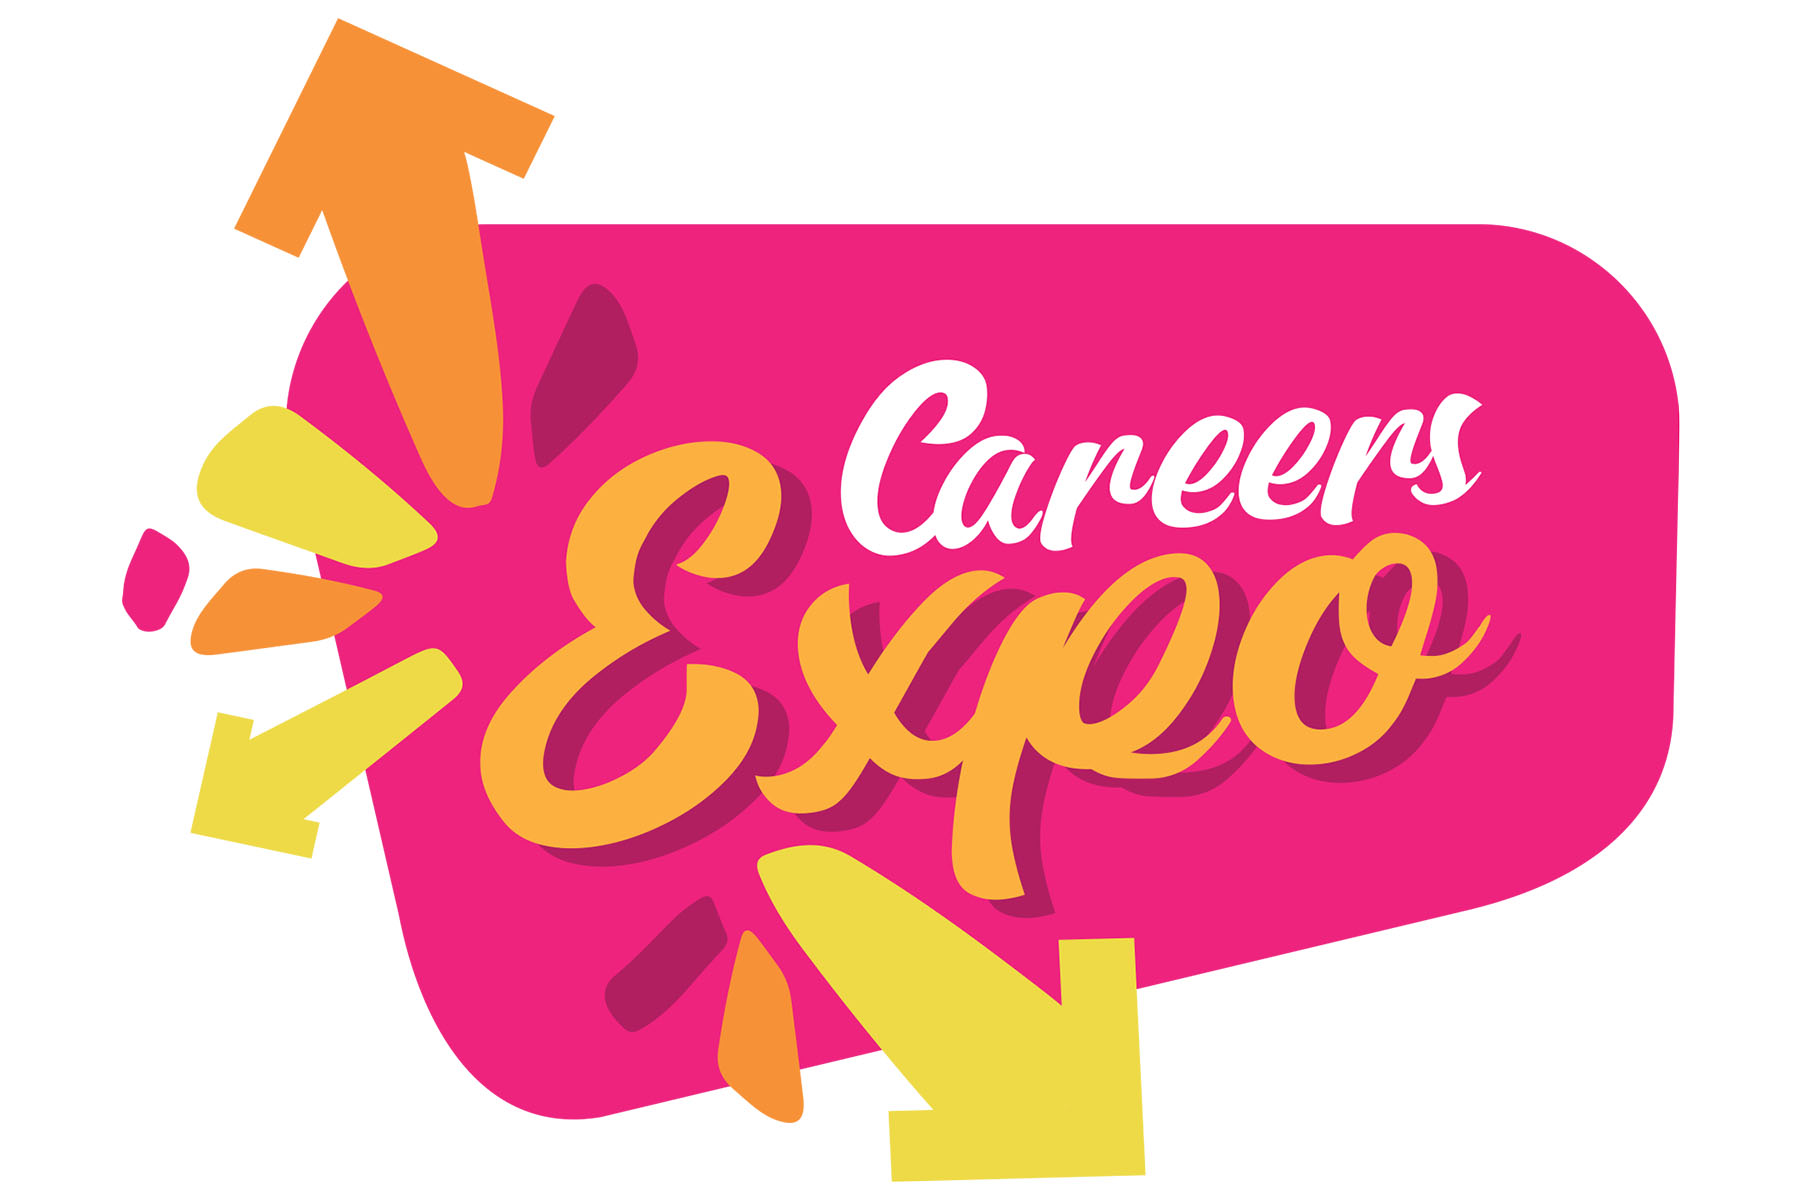 Careers expo logo